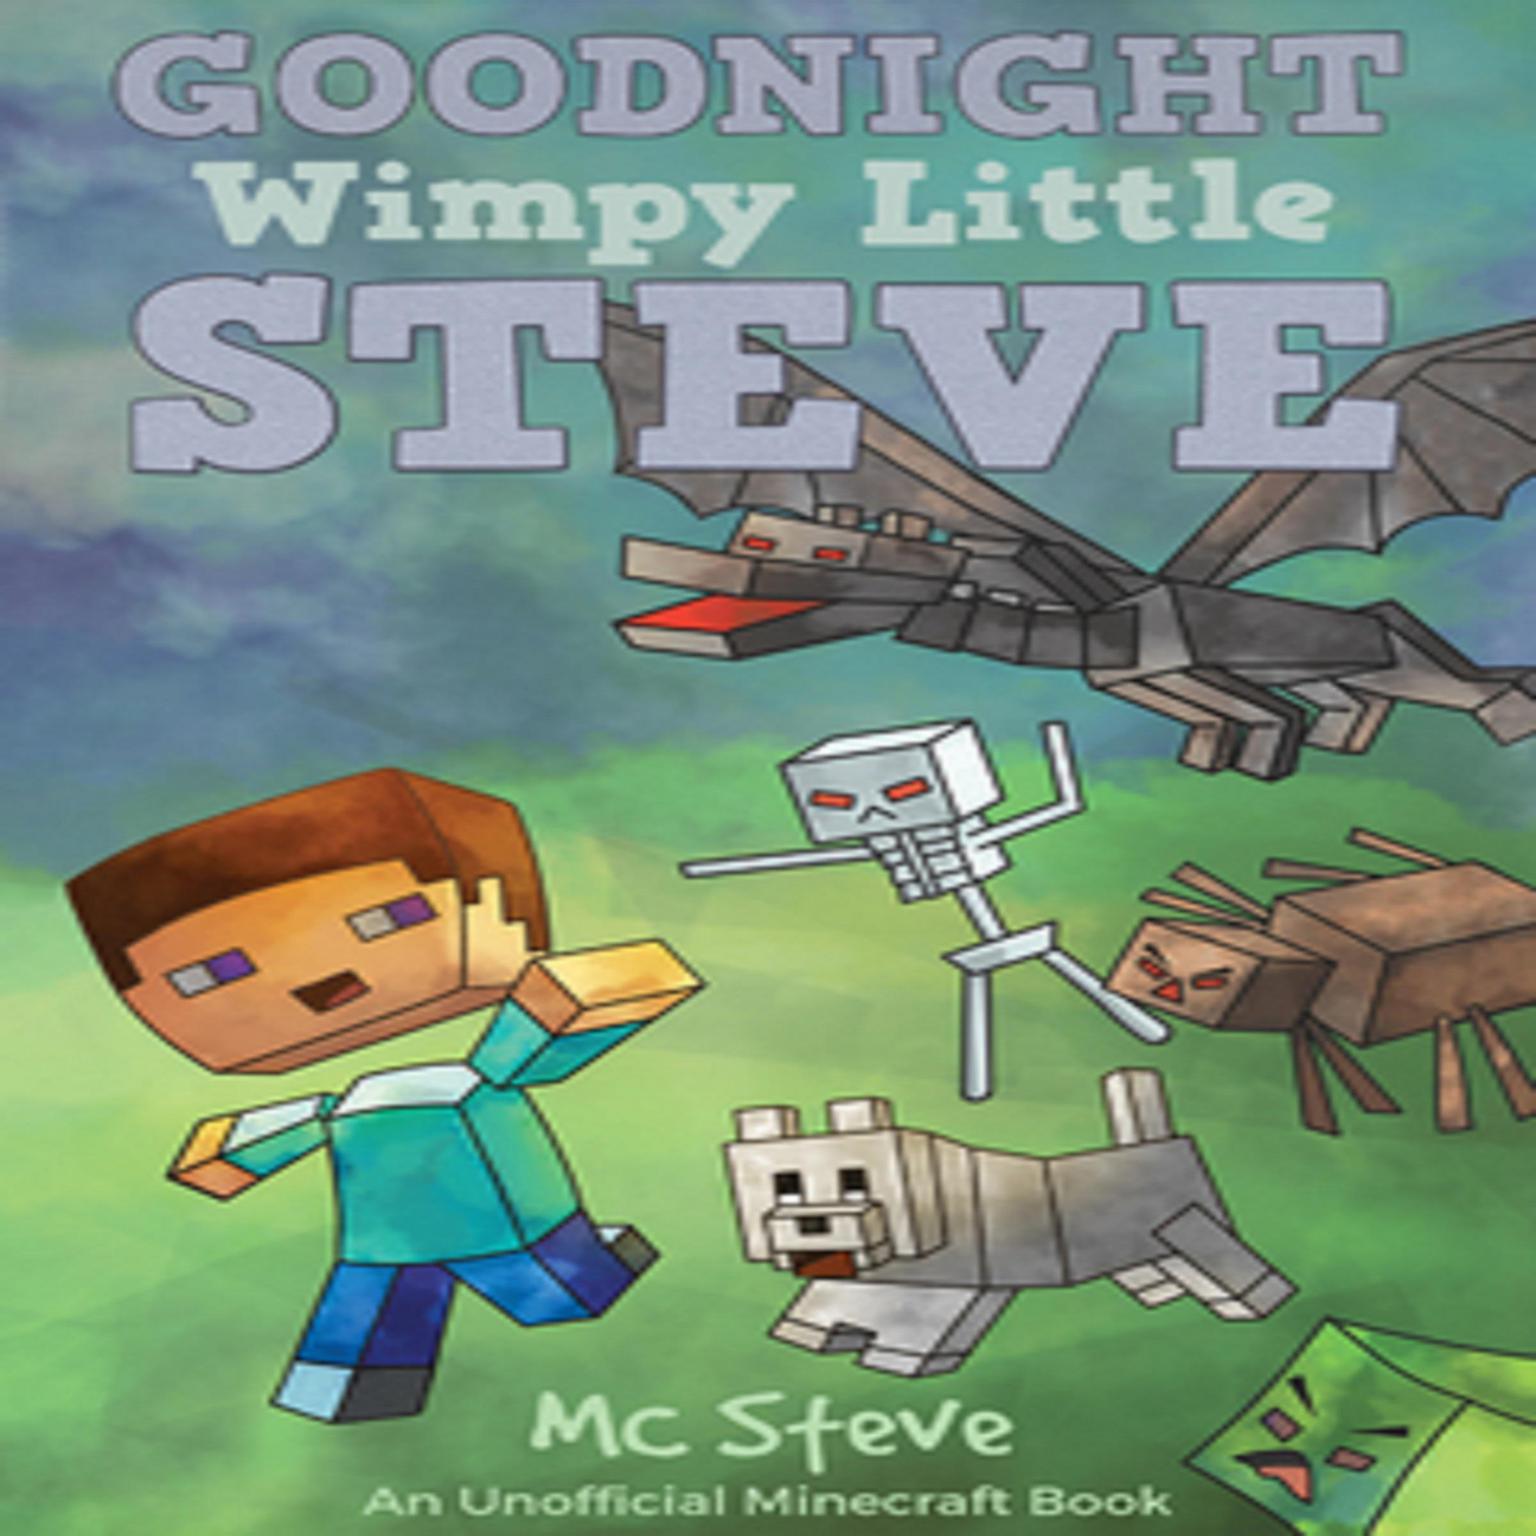 Goodnight, Wimpy Little Steve (An Unofficial Minecraft Book) Audiobook, by MC Steve